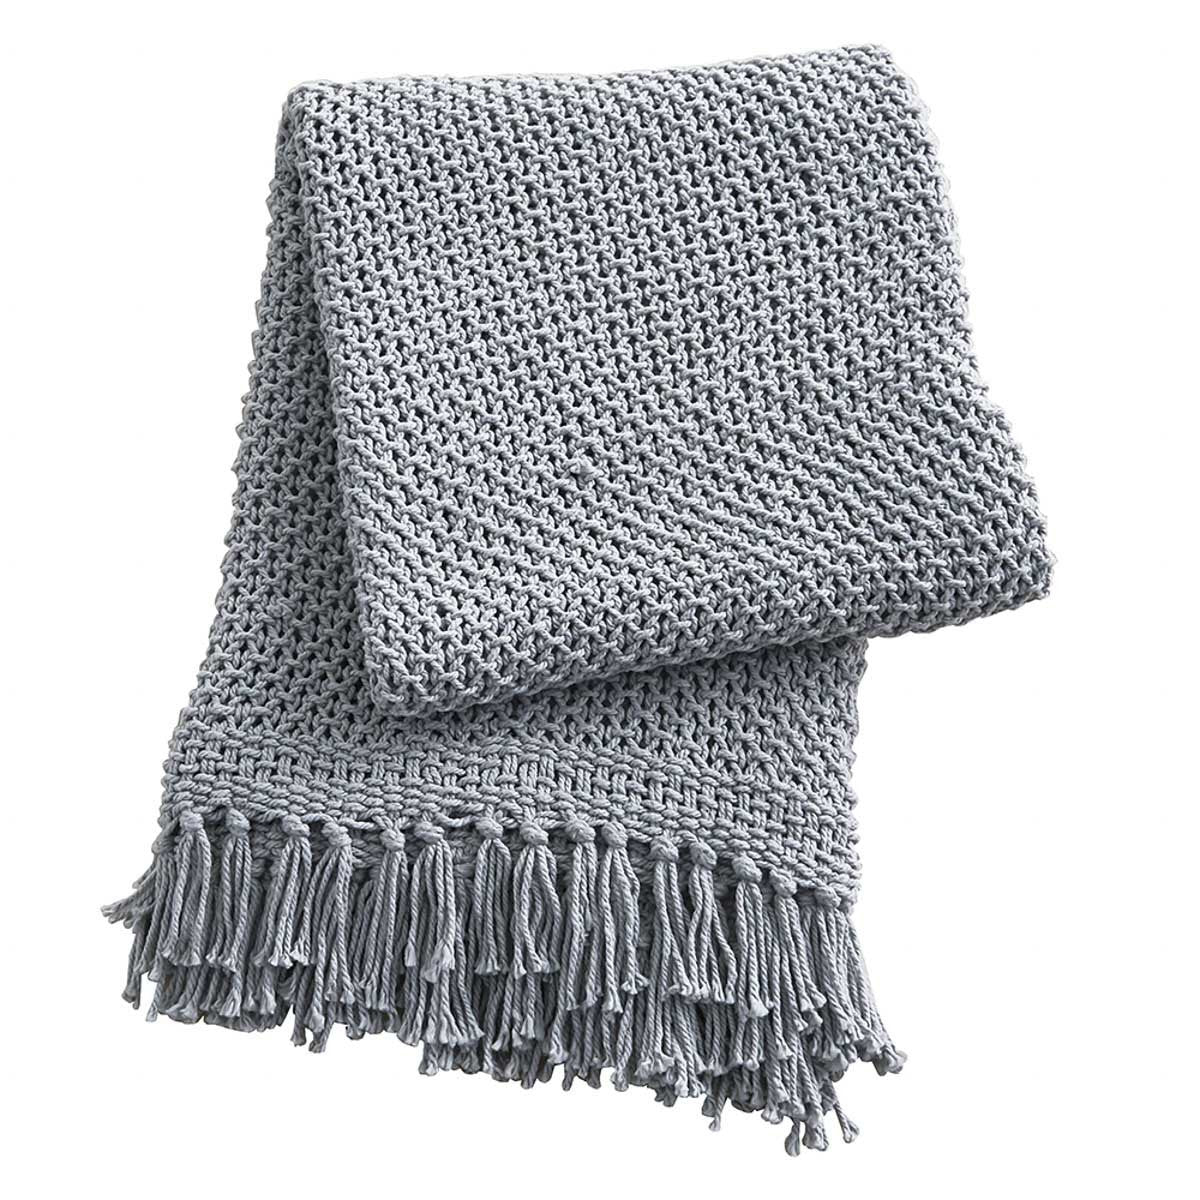 Open Knit Throw - Mist Park Designs